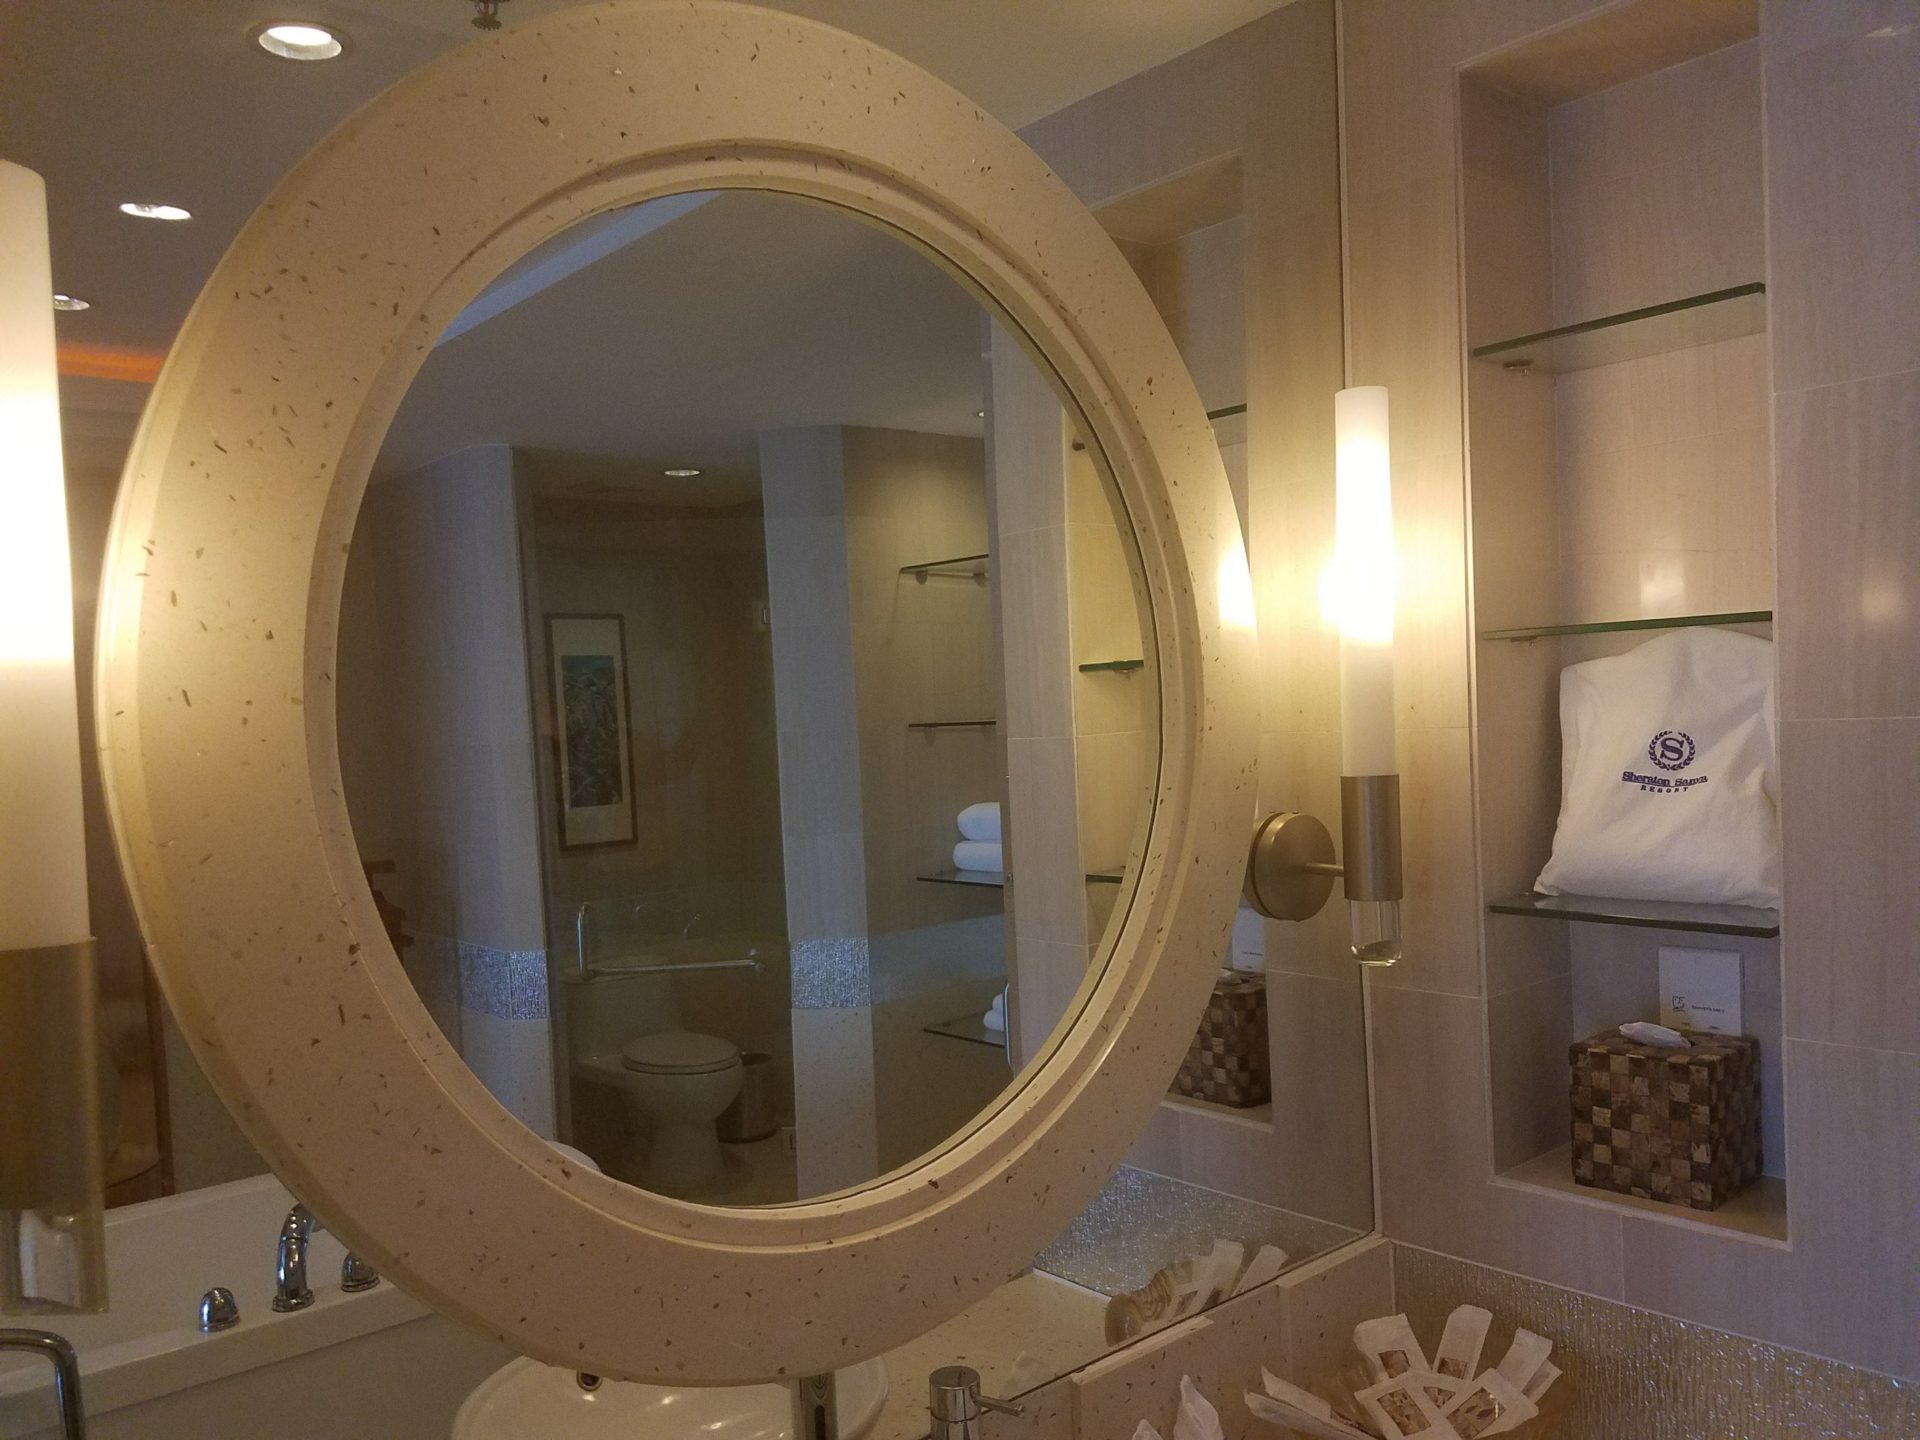 a mirror in a bathroom